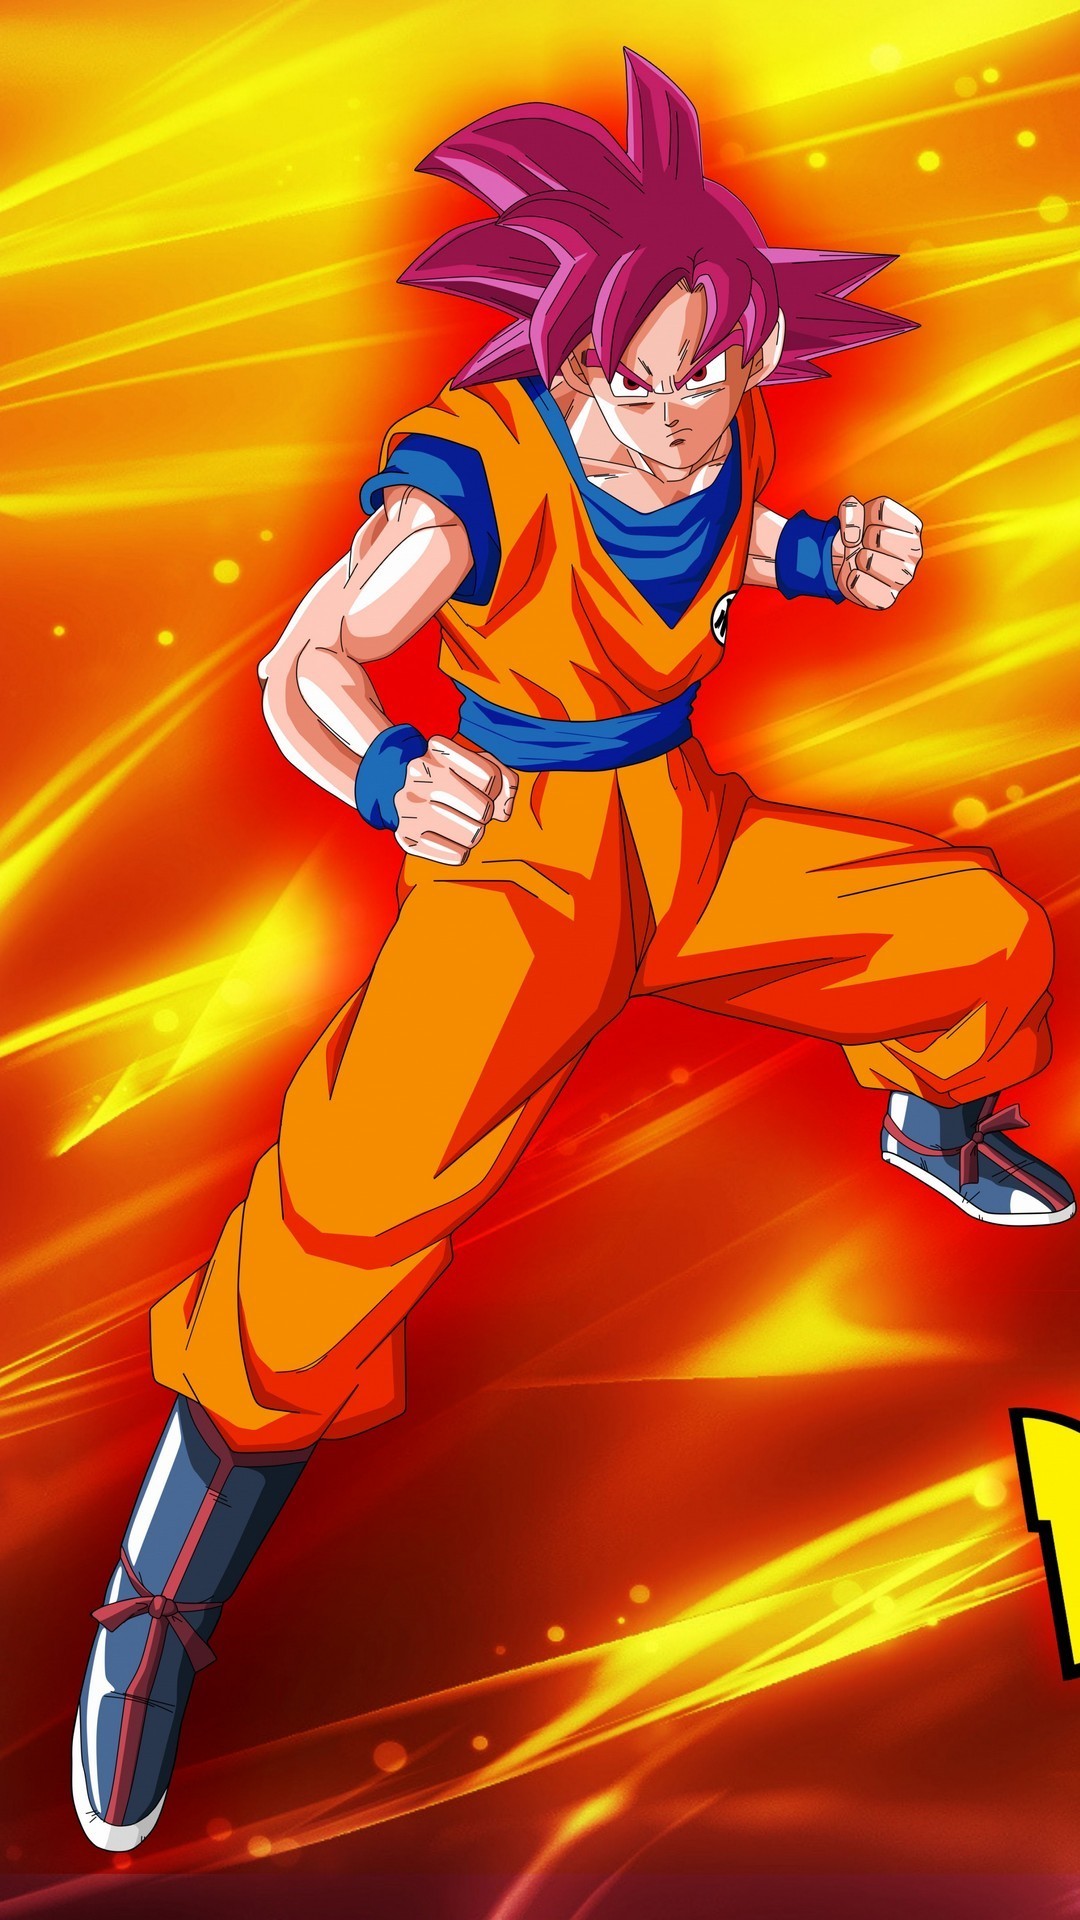 Goku Super Saiyan God Wallpaper Android High Resolution 1080X1920